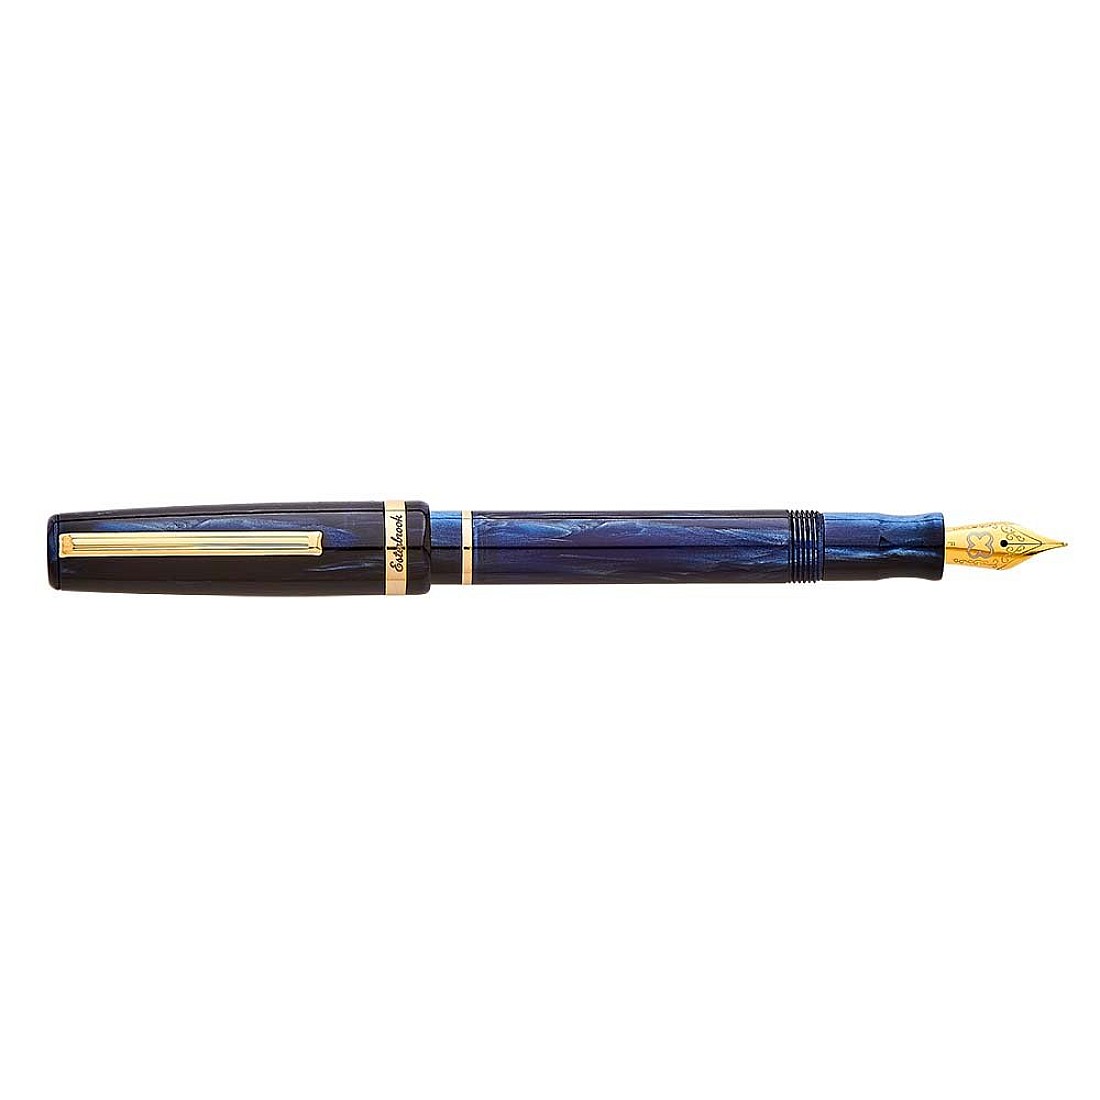 Esterbrook JR Pocket Denim Blue Fountain pen